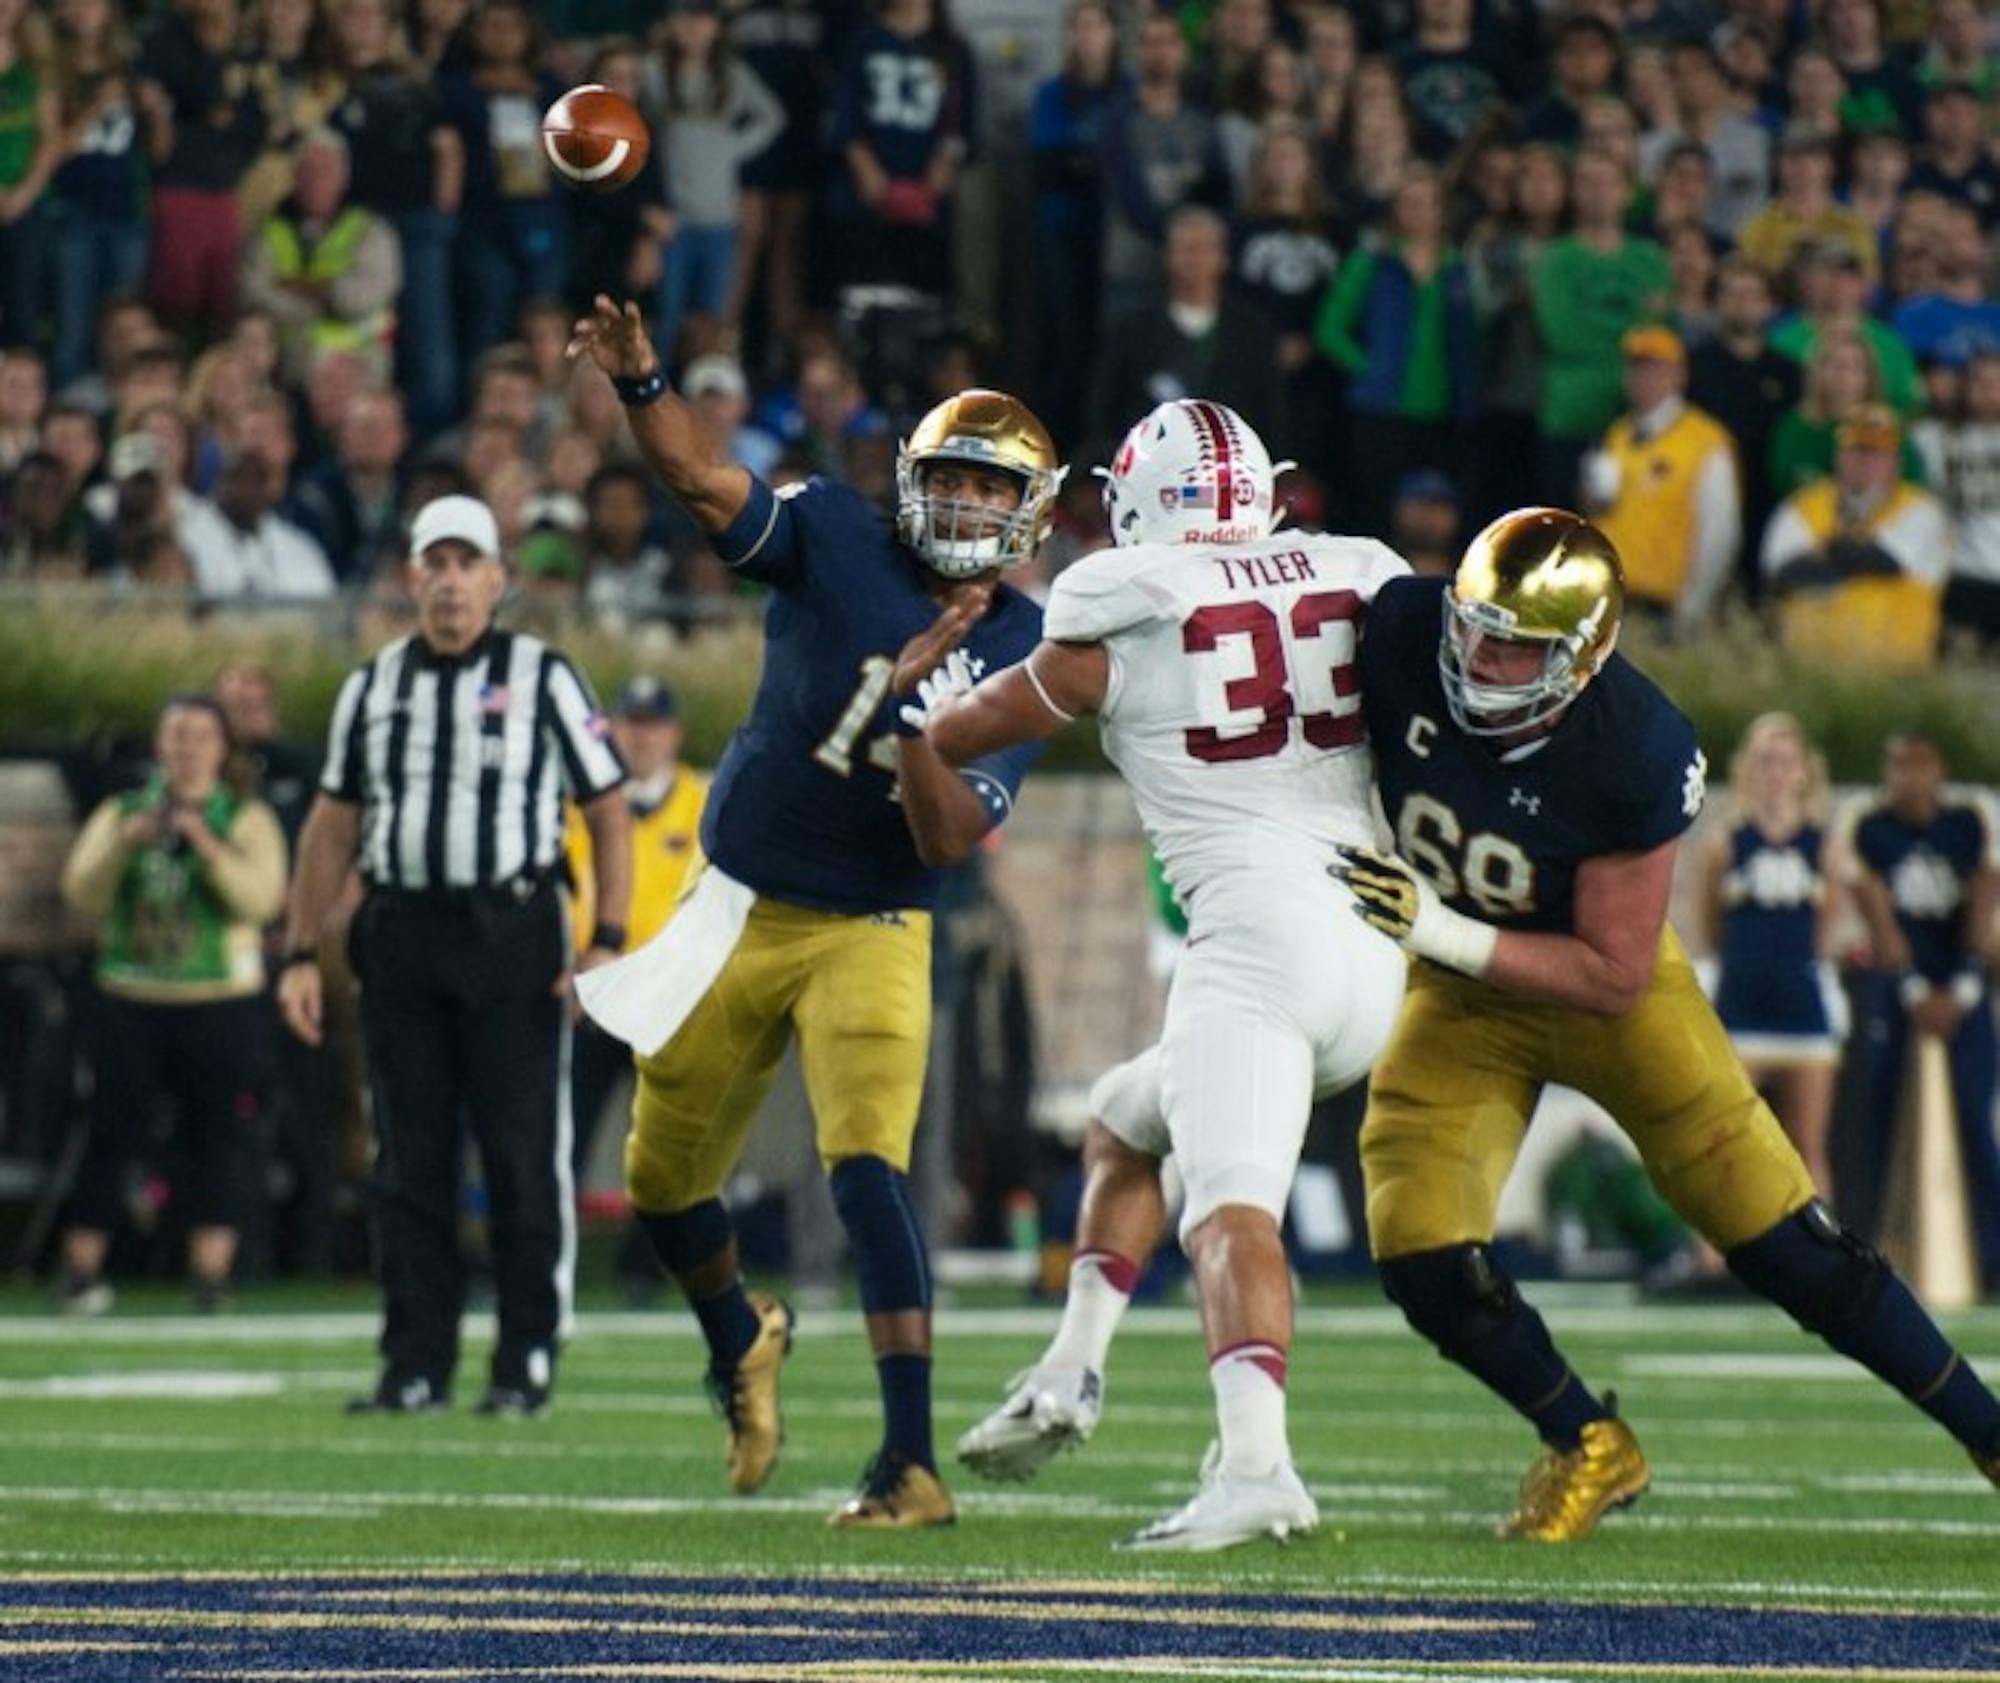 Irish junior quarterback DeShone Kizer throws a pass during Notre Dame's 17-10 loss to Stanford on Saturday.